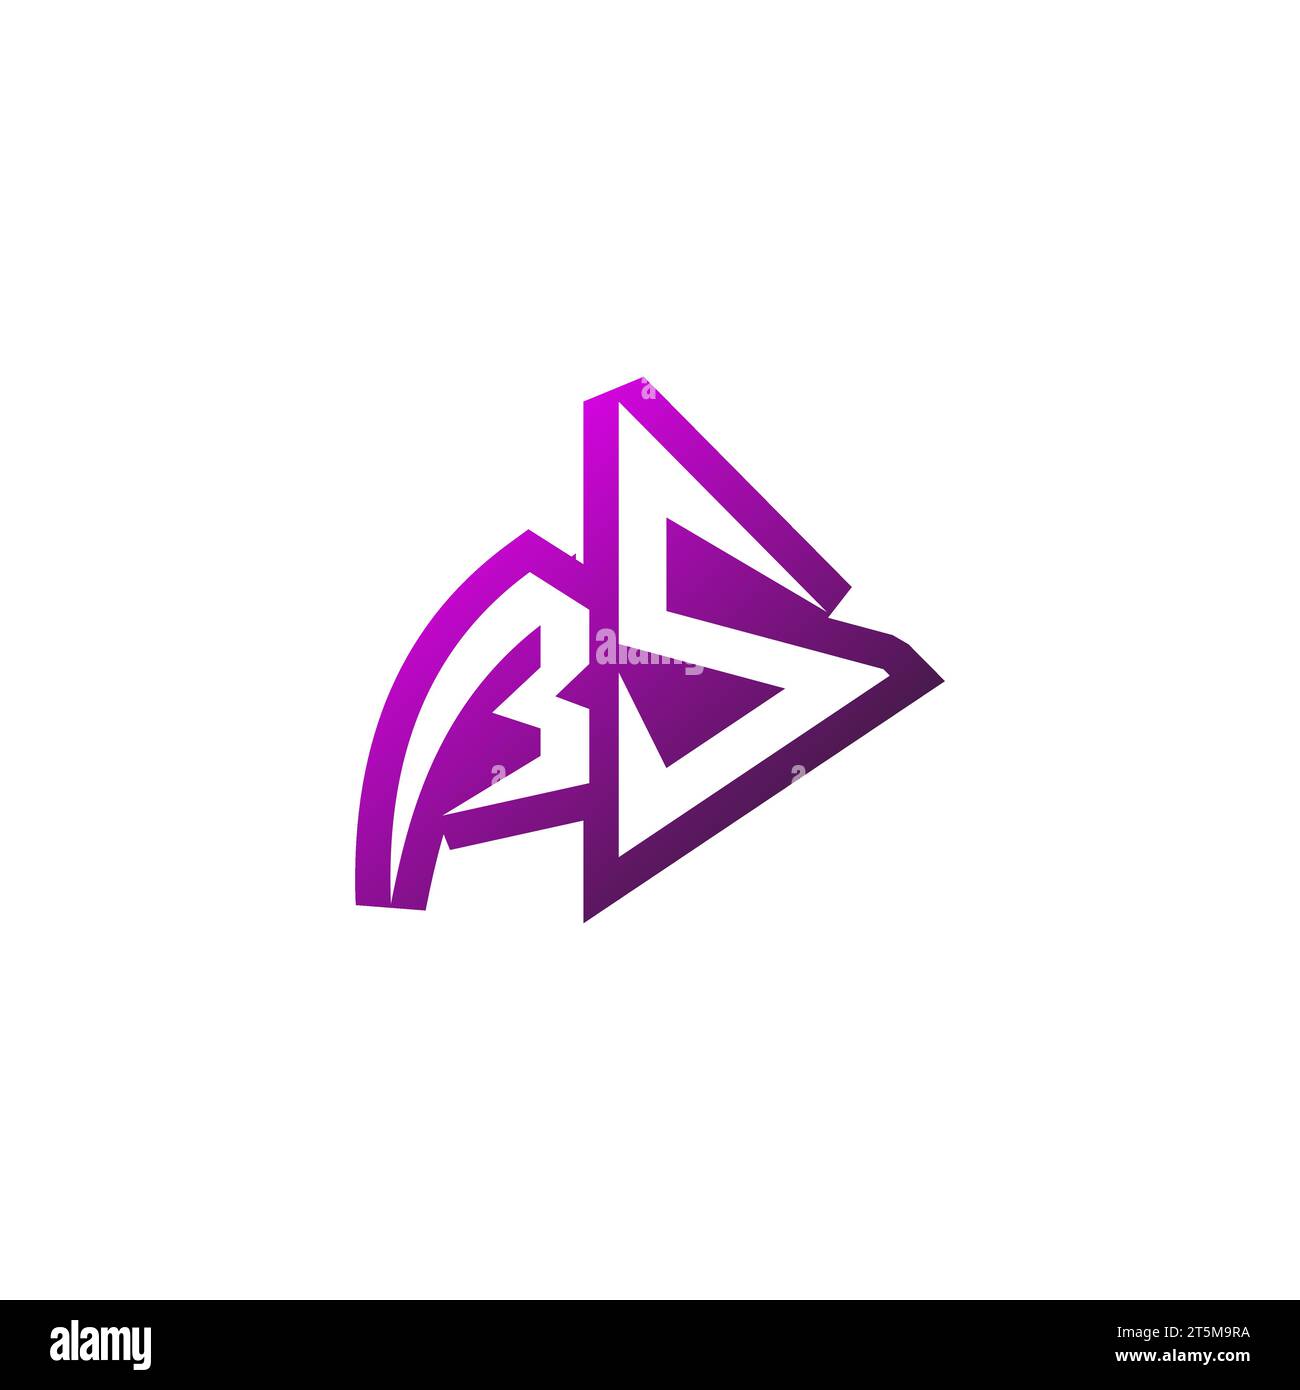 BS Premium emblem logo initial esport and gaming design concept Stock Vector